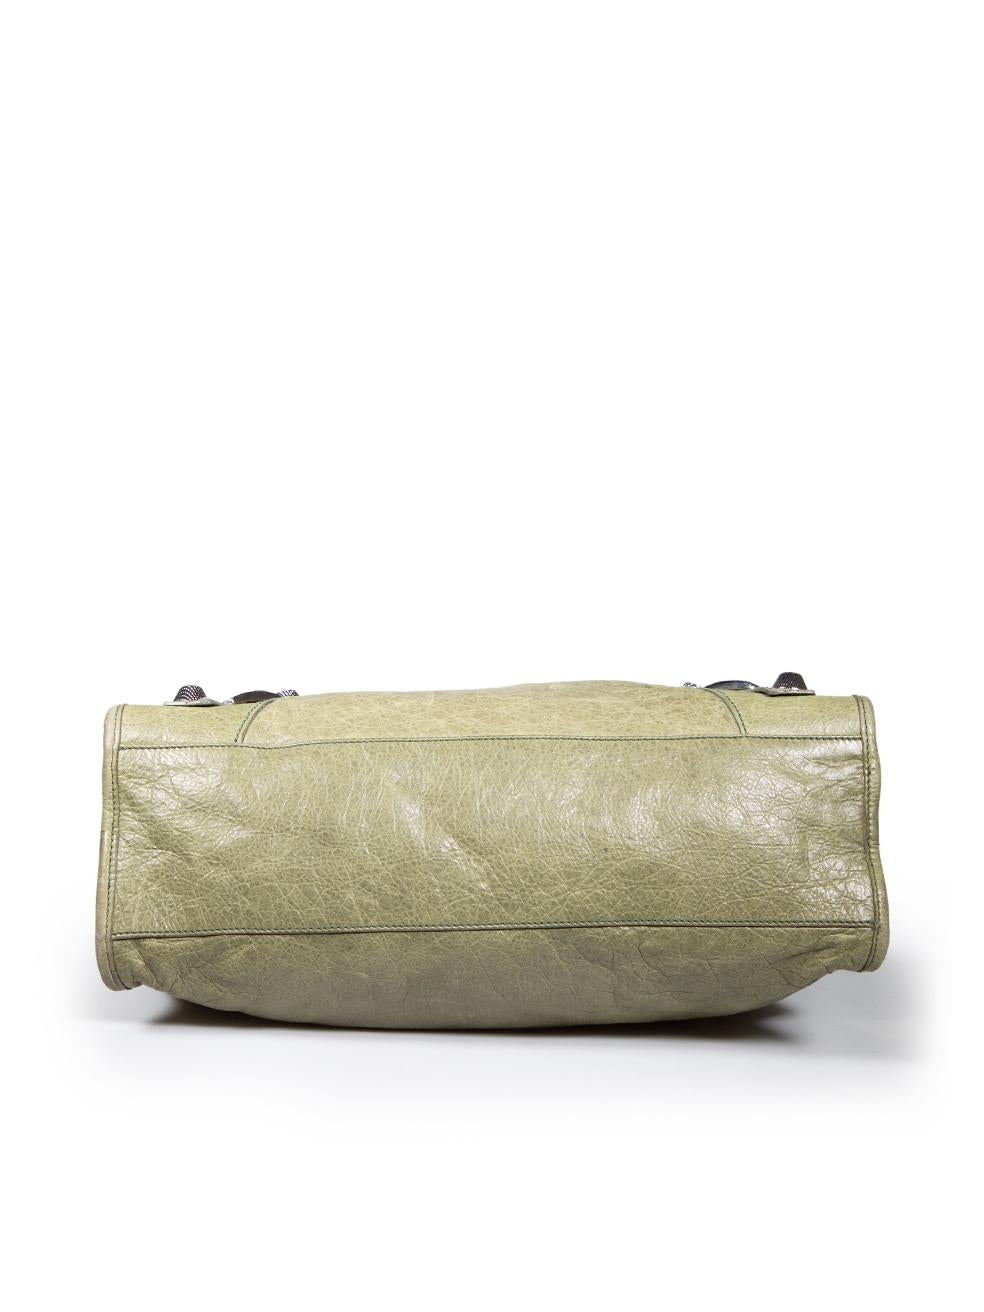 Women's Balenciaga Green Leather Small Classic City Bag For Sale